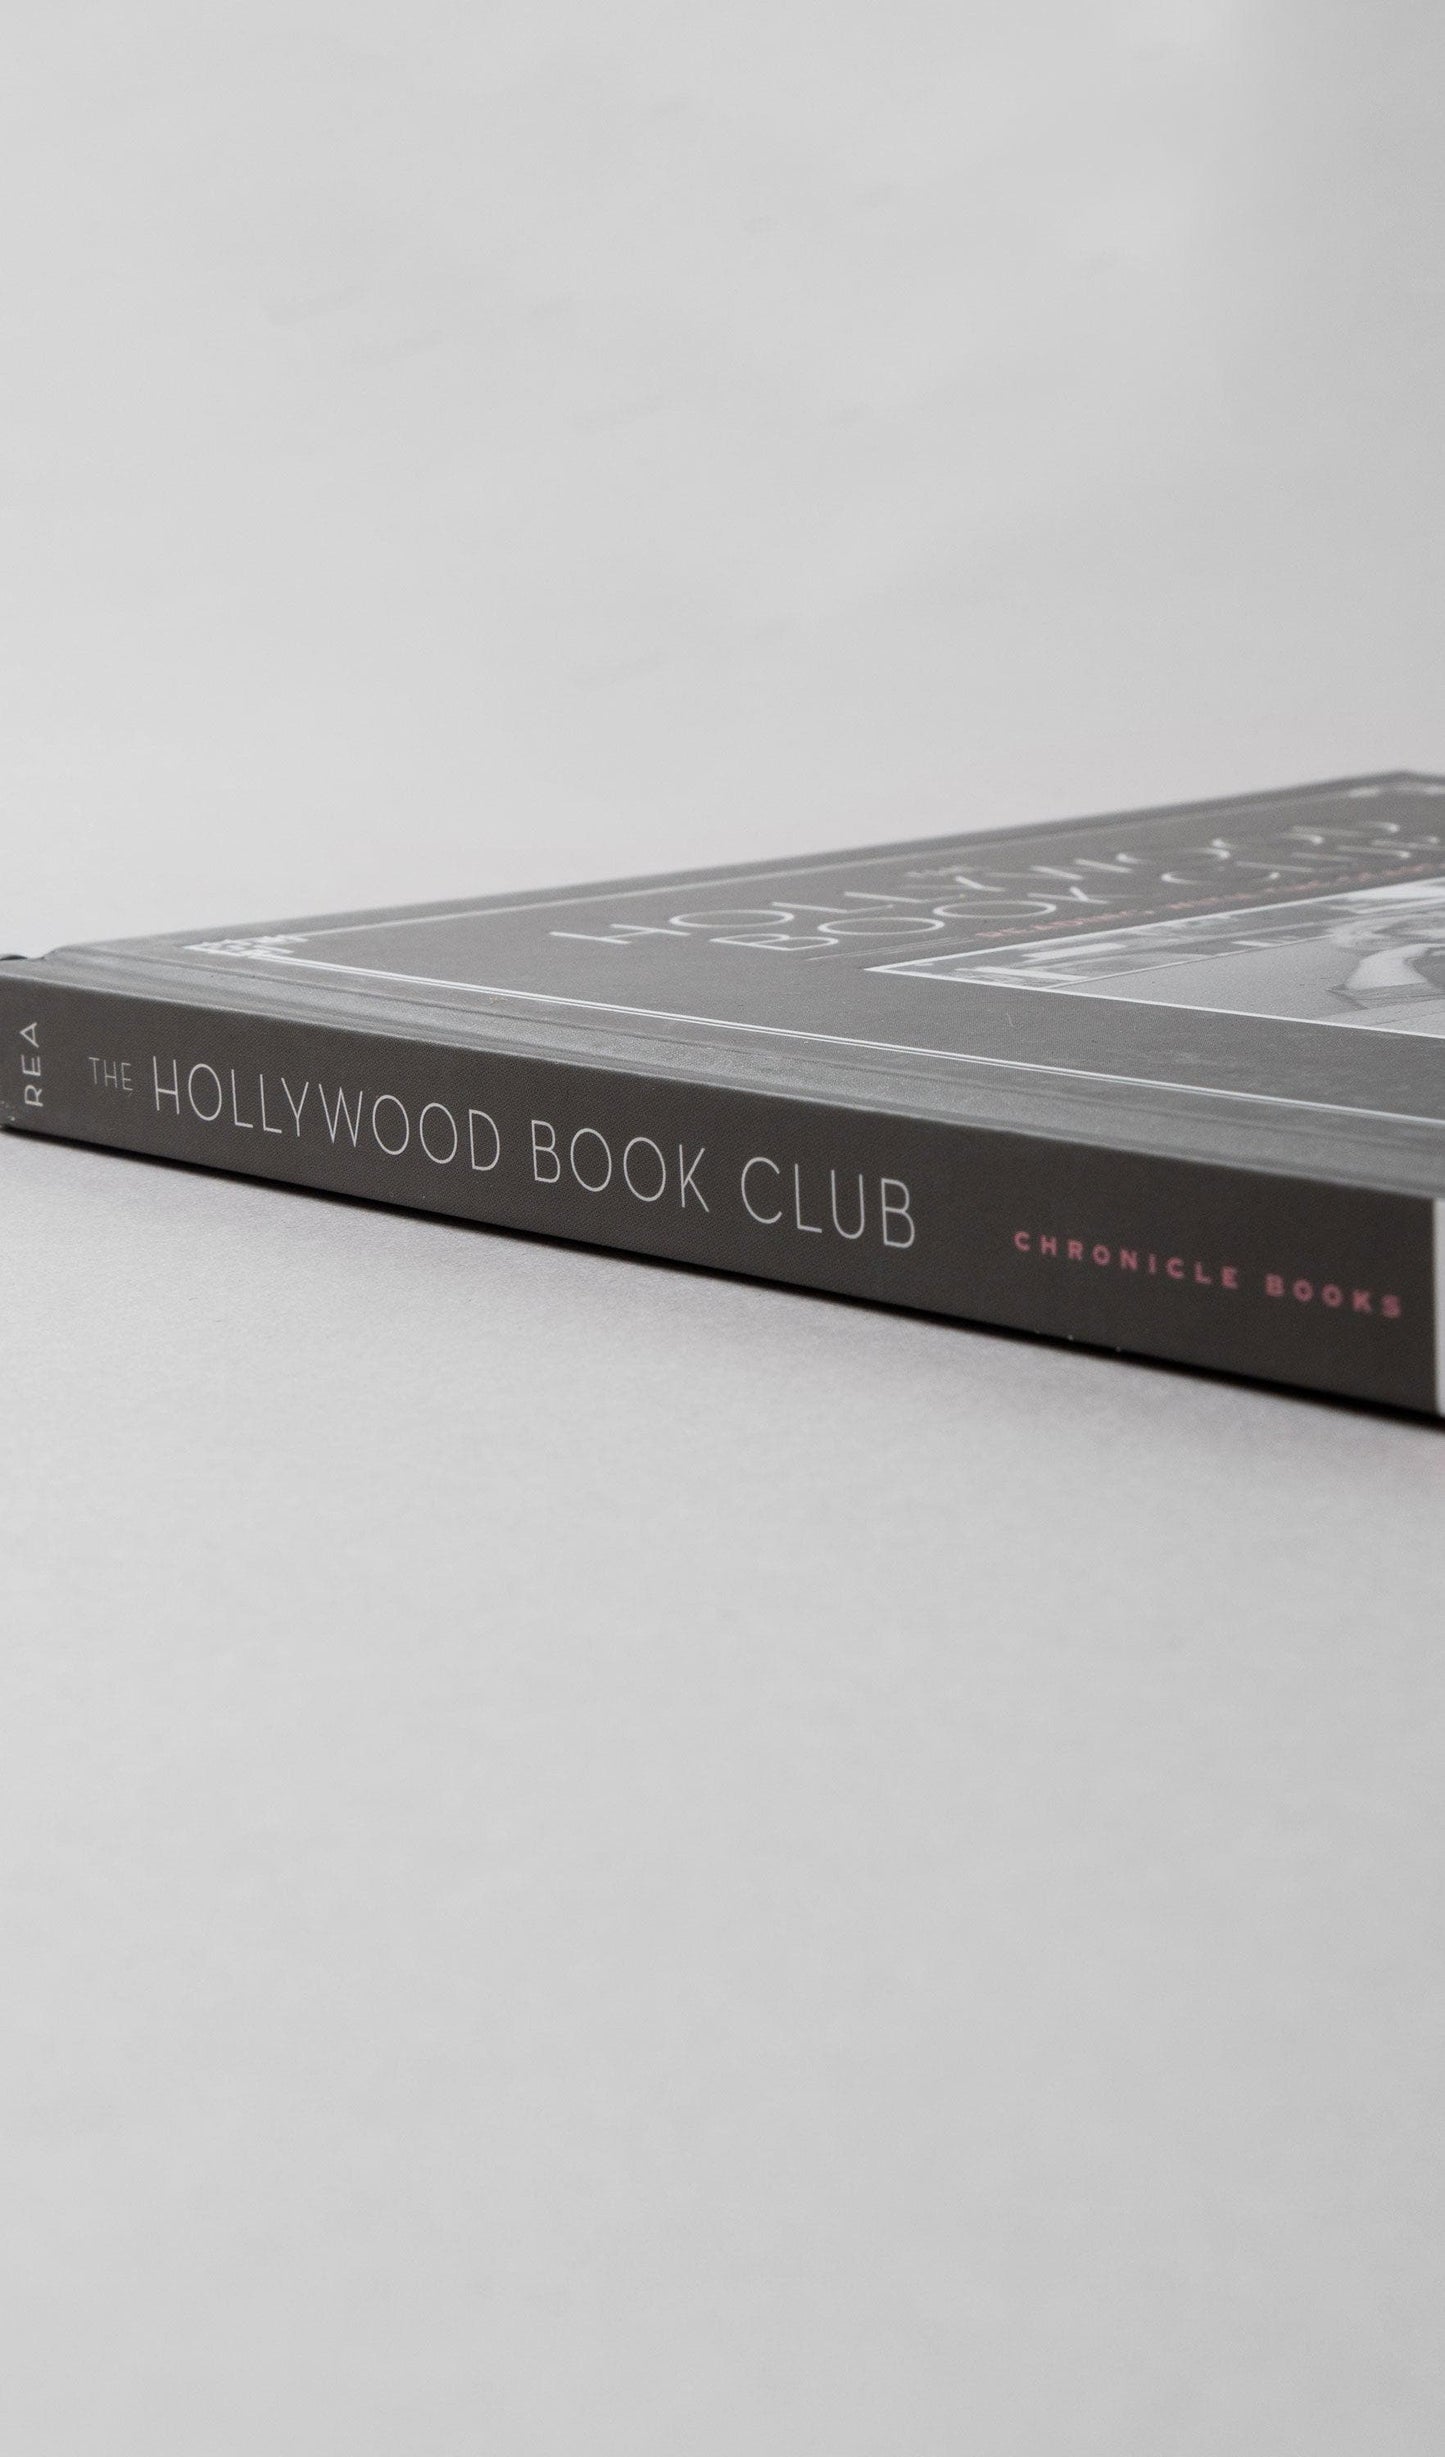 Acapella Ropa Acapella Print Books Libro - The Hollywood Book Club